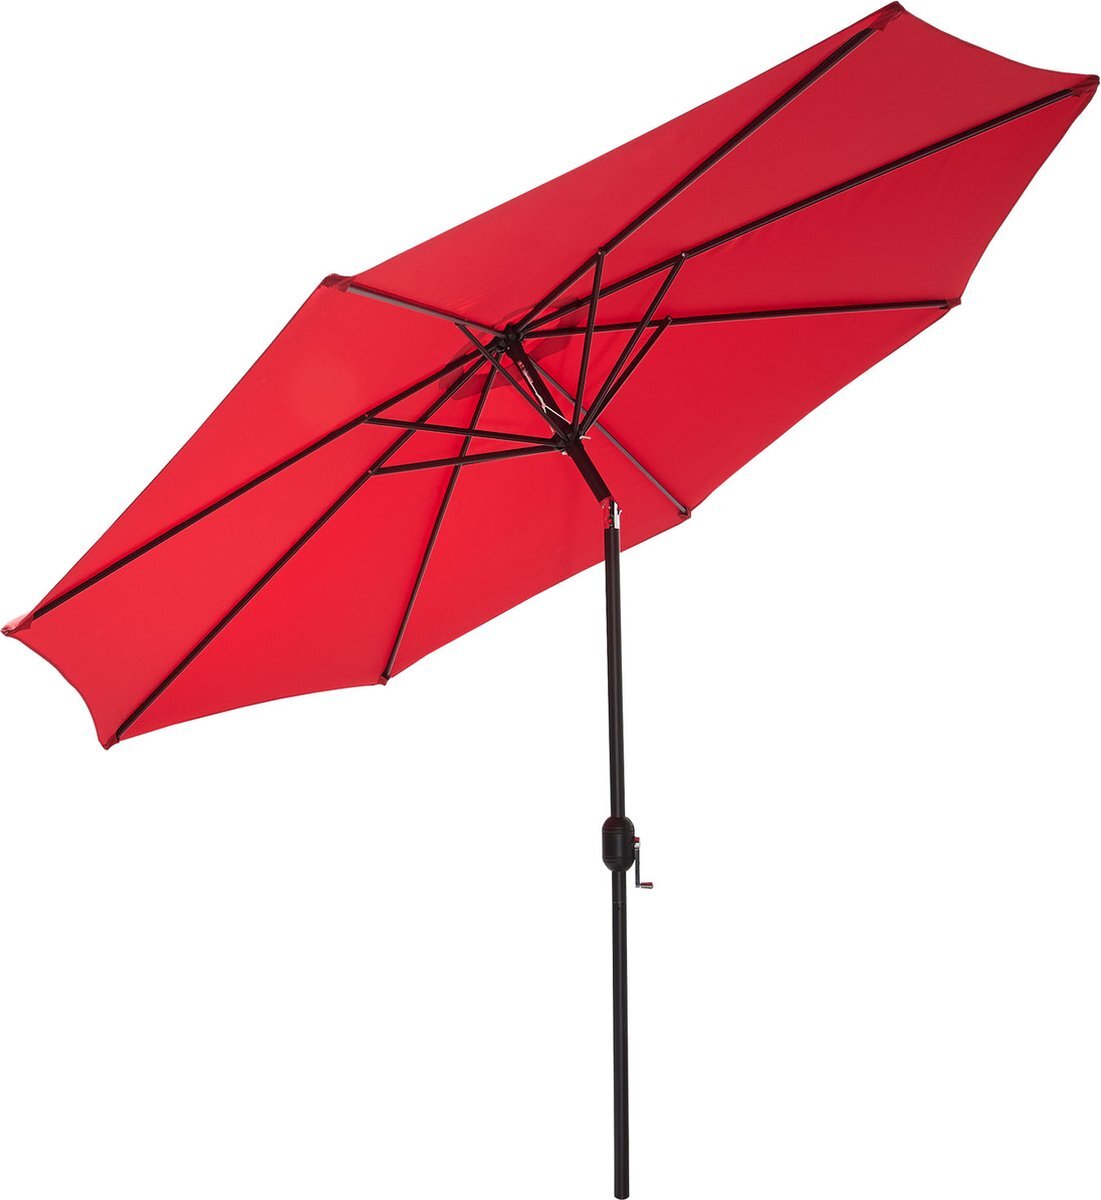 Gartenfreude Aluminium parasol, marktscherm, UV+50, 270 cm, rood